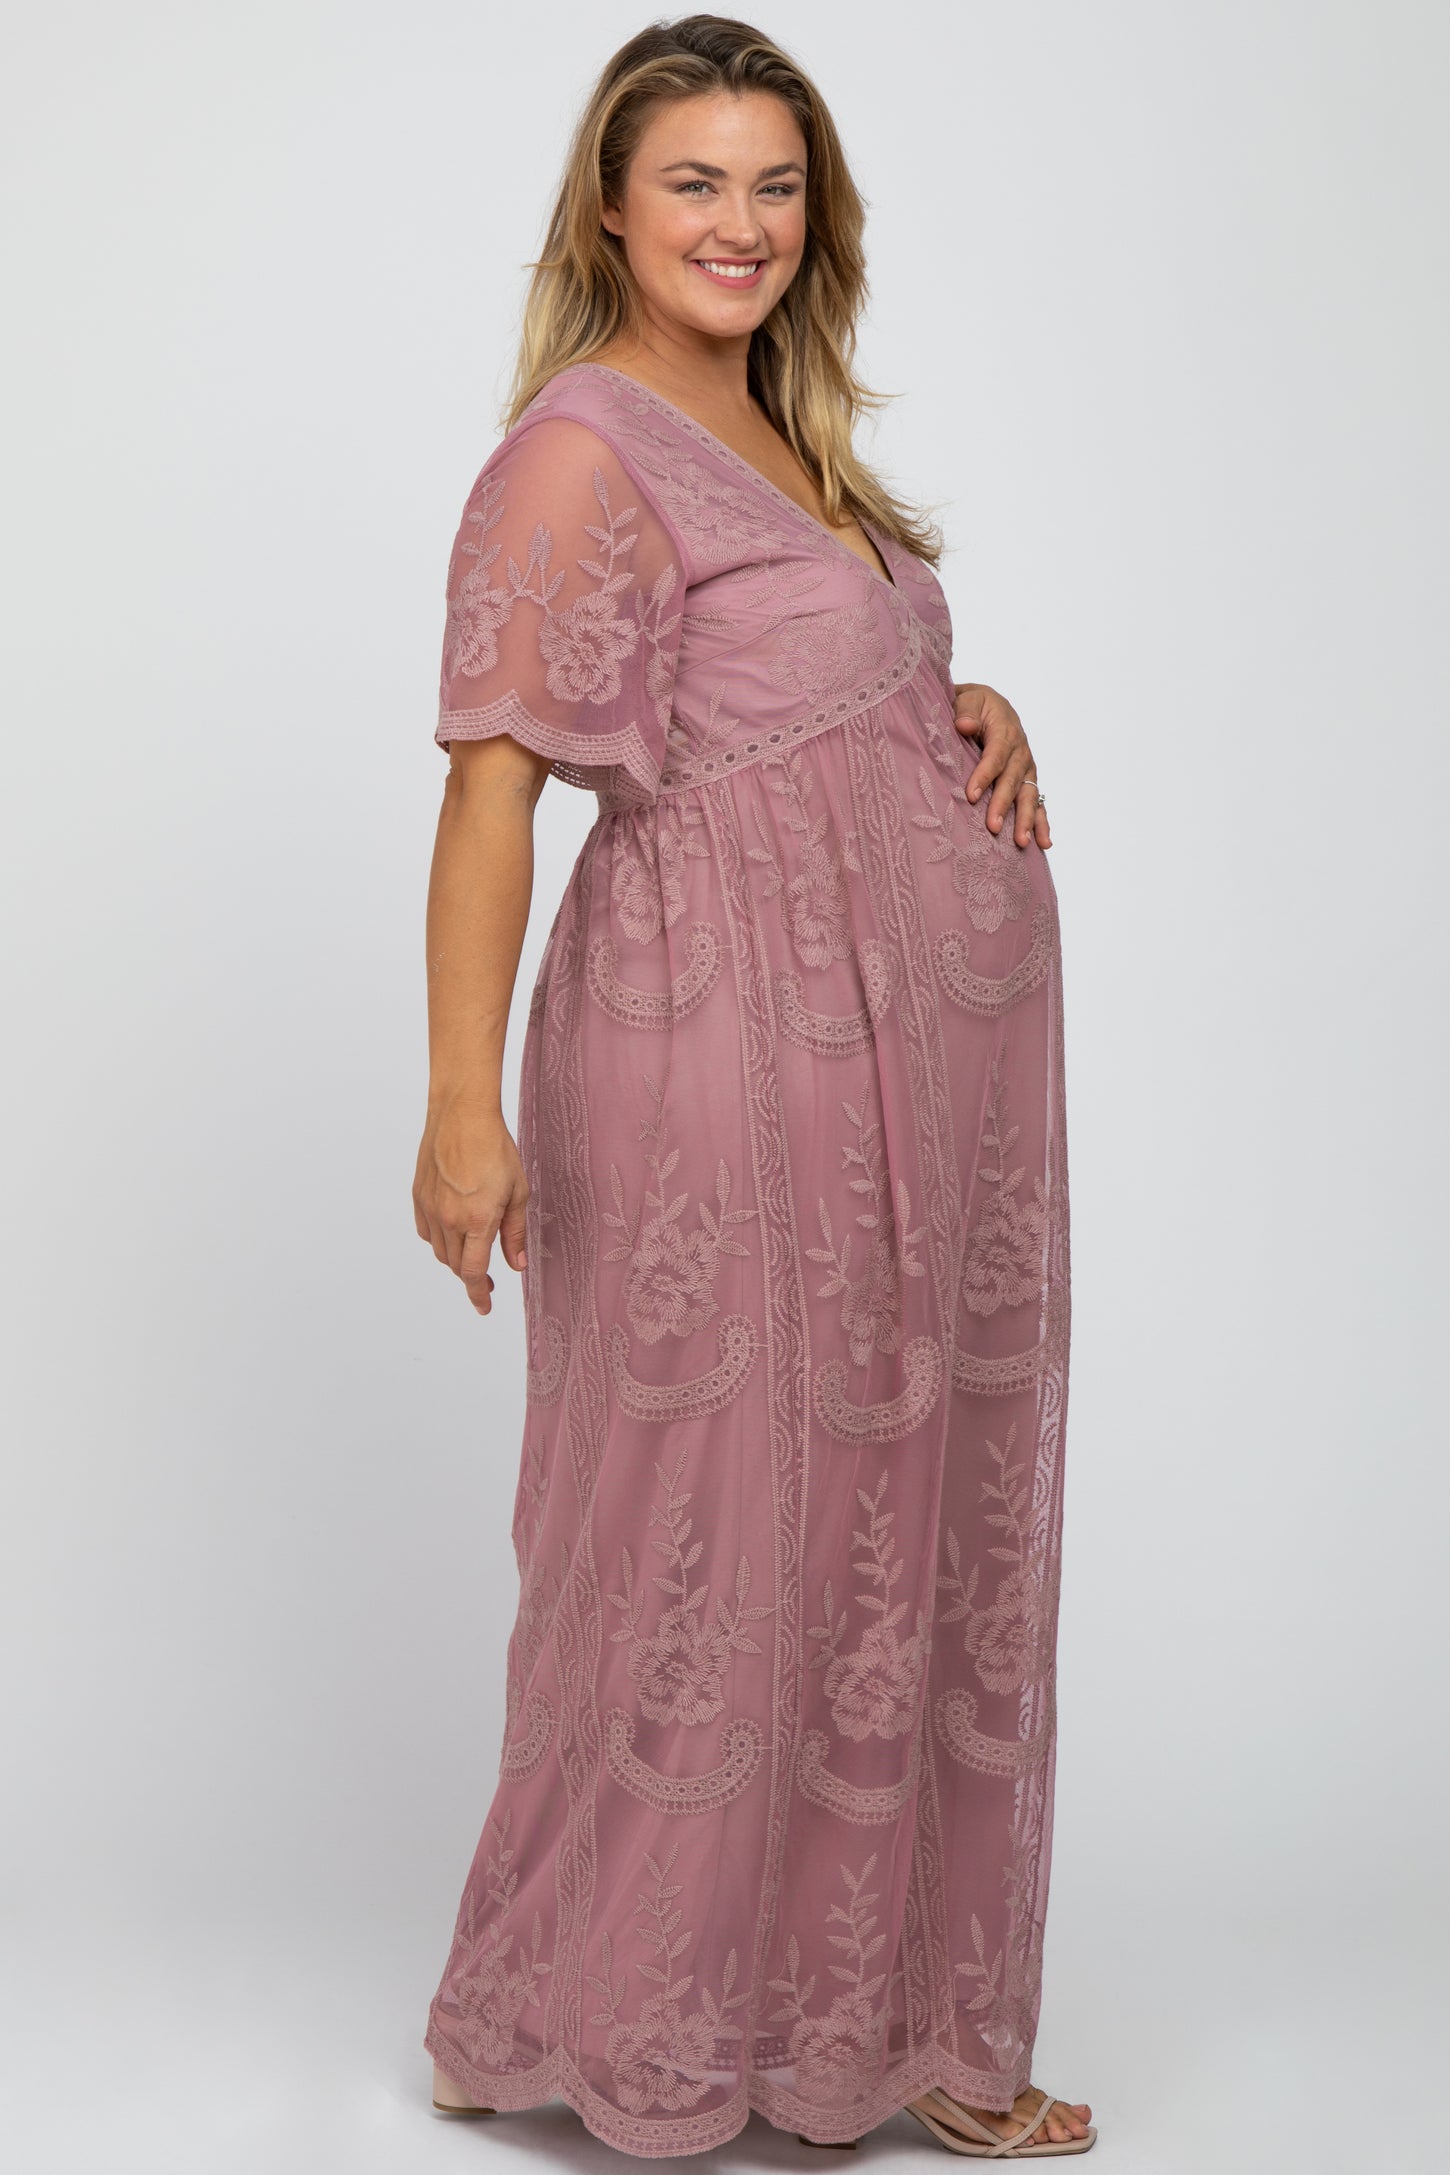 Mauve Lace Mesh Overlay Maternity Plus Maxi Dress